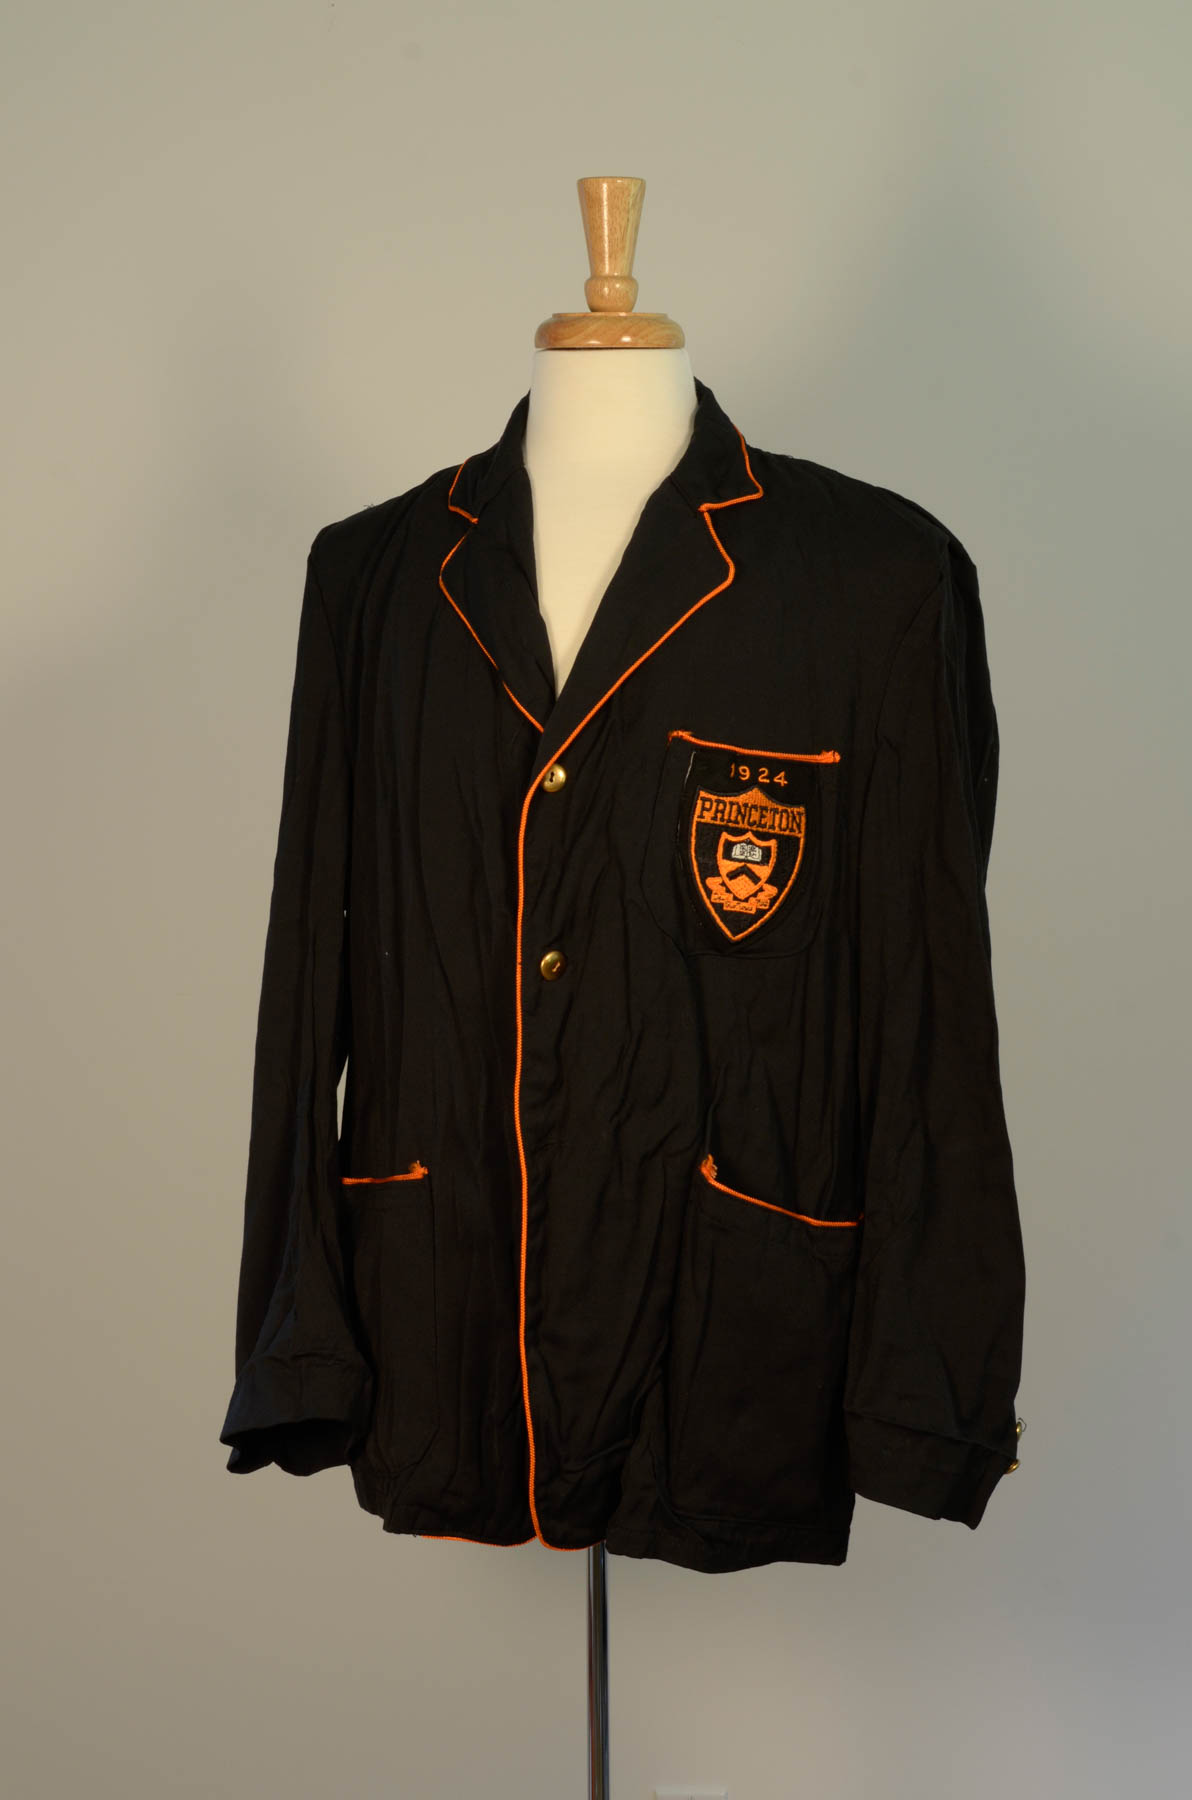 Reunion Jacket 1924 Variation 1 Front